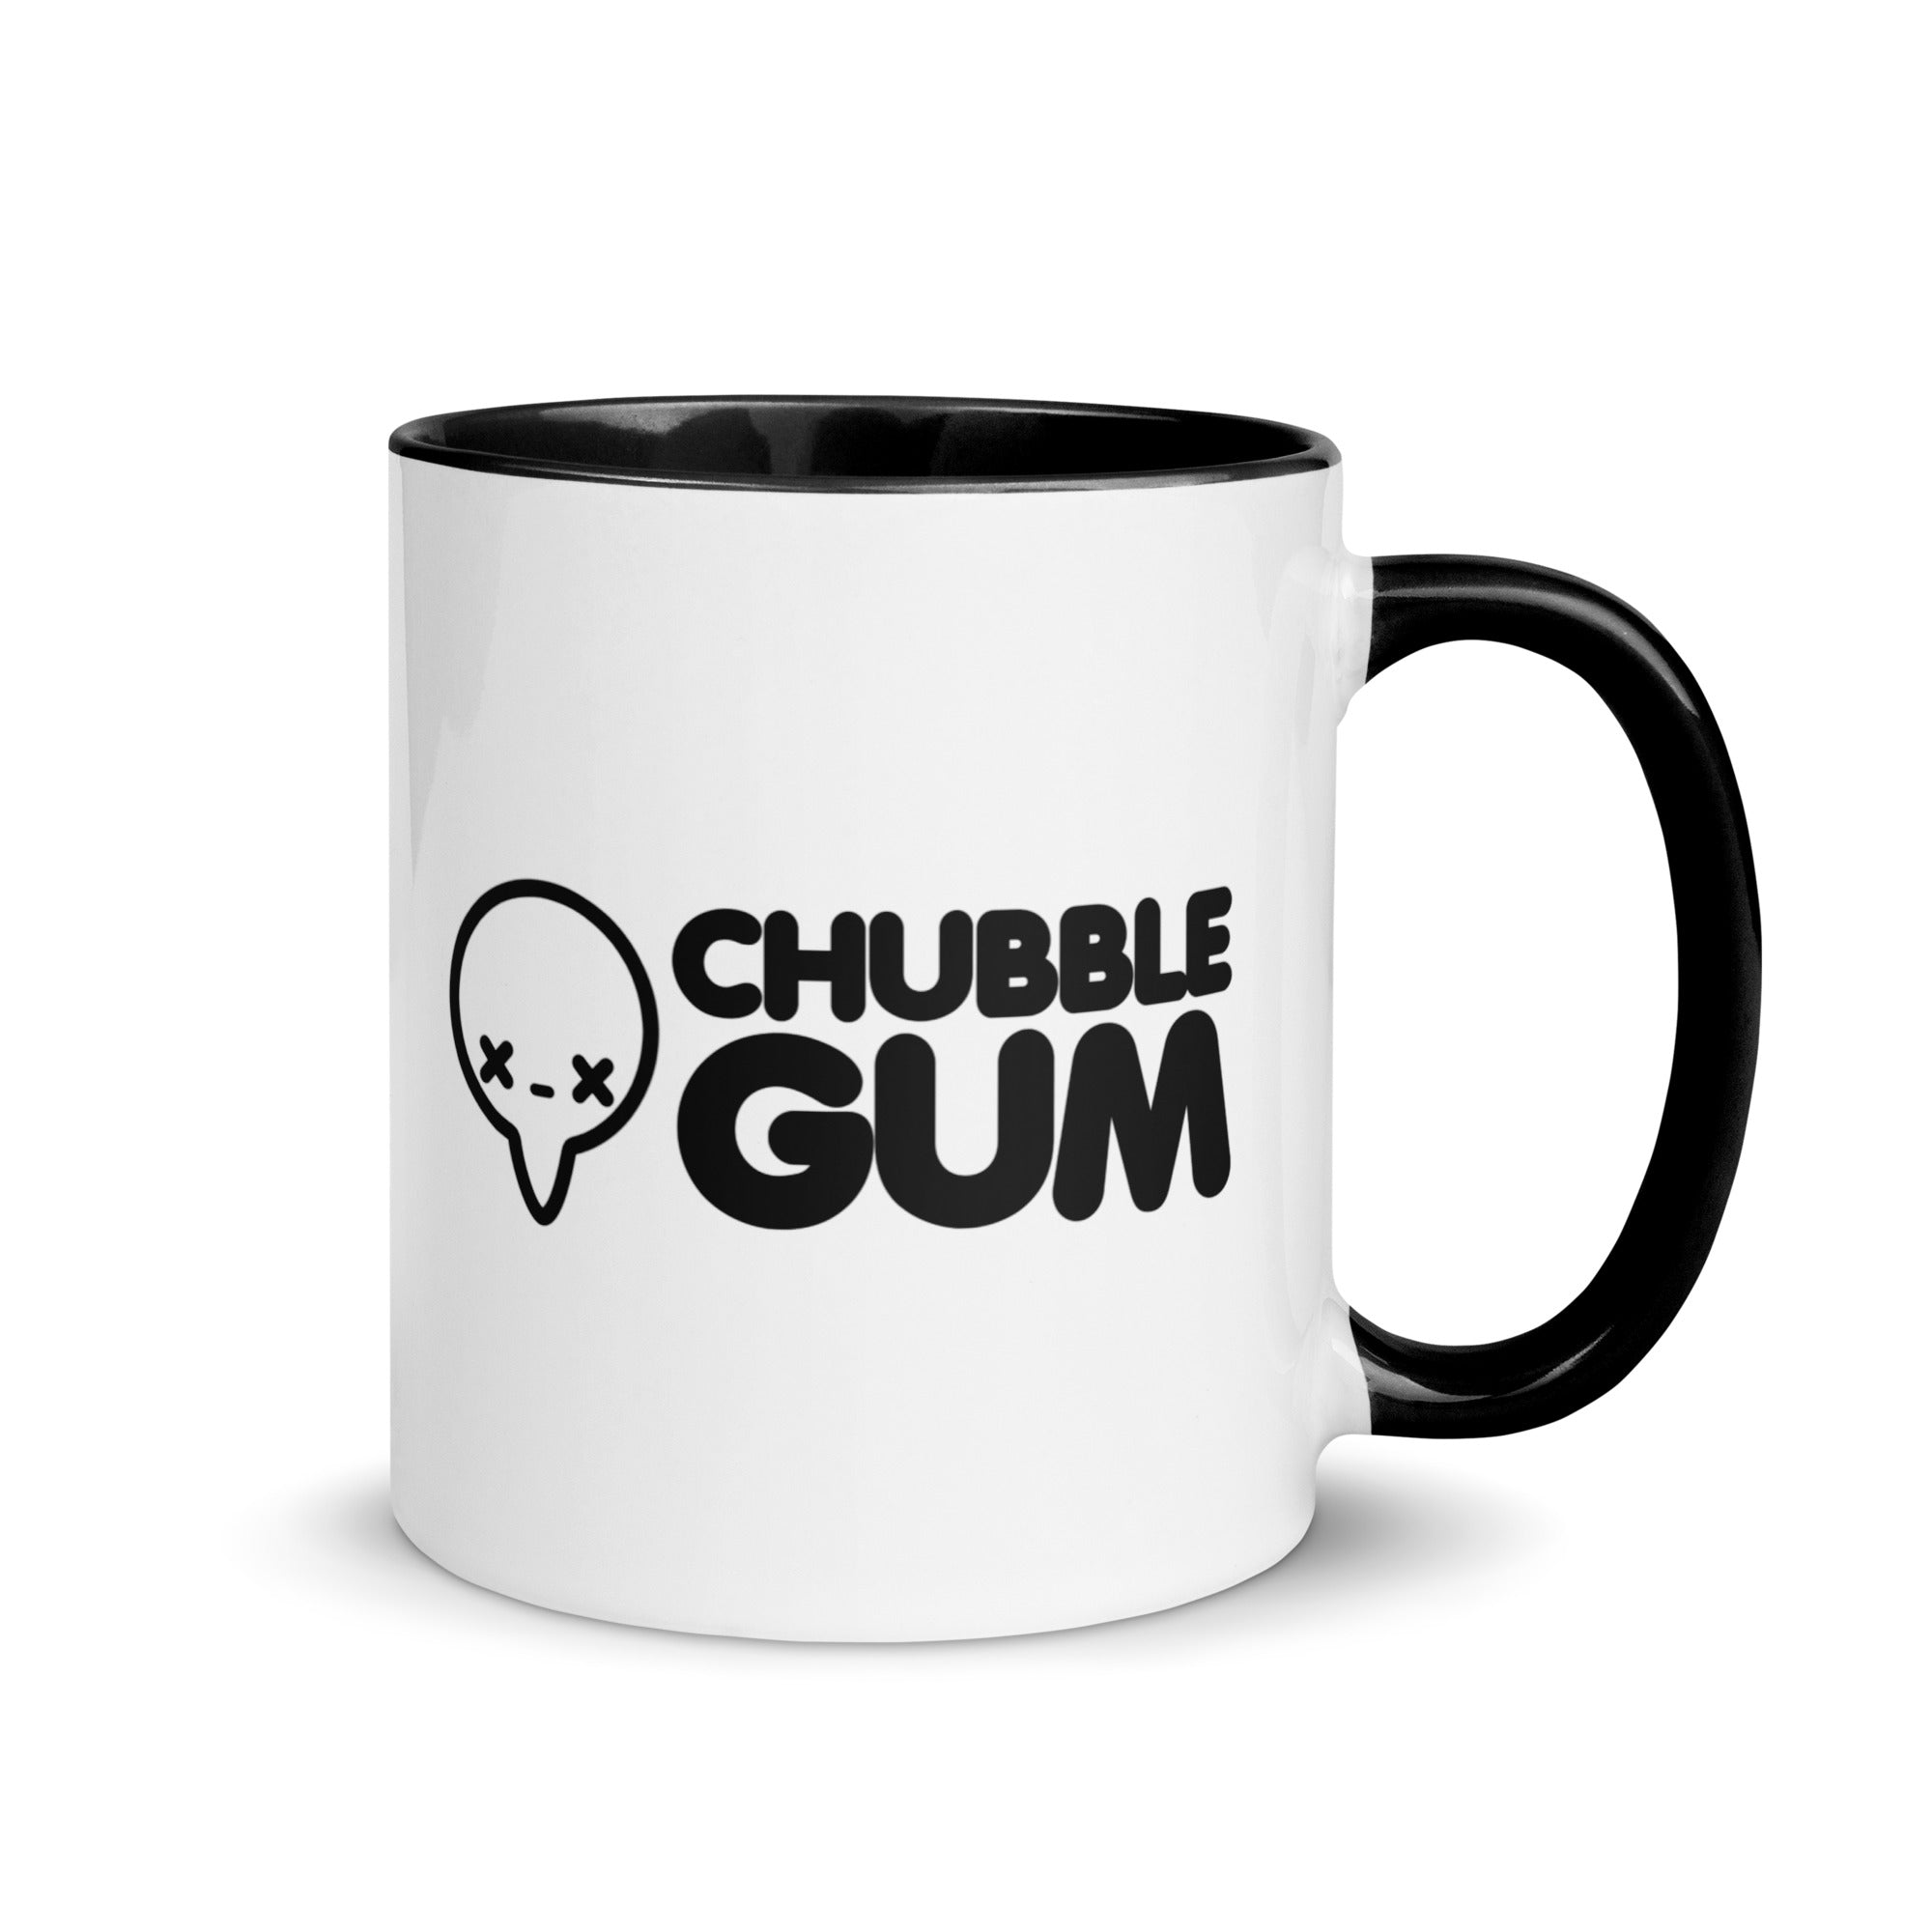 I SURVIVED A CRITICAL HIT - Mug With Color Inside - ChubbleGumLLC